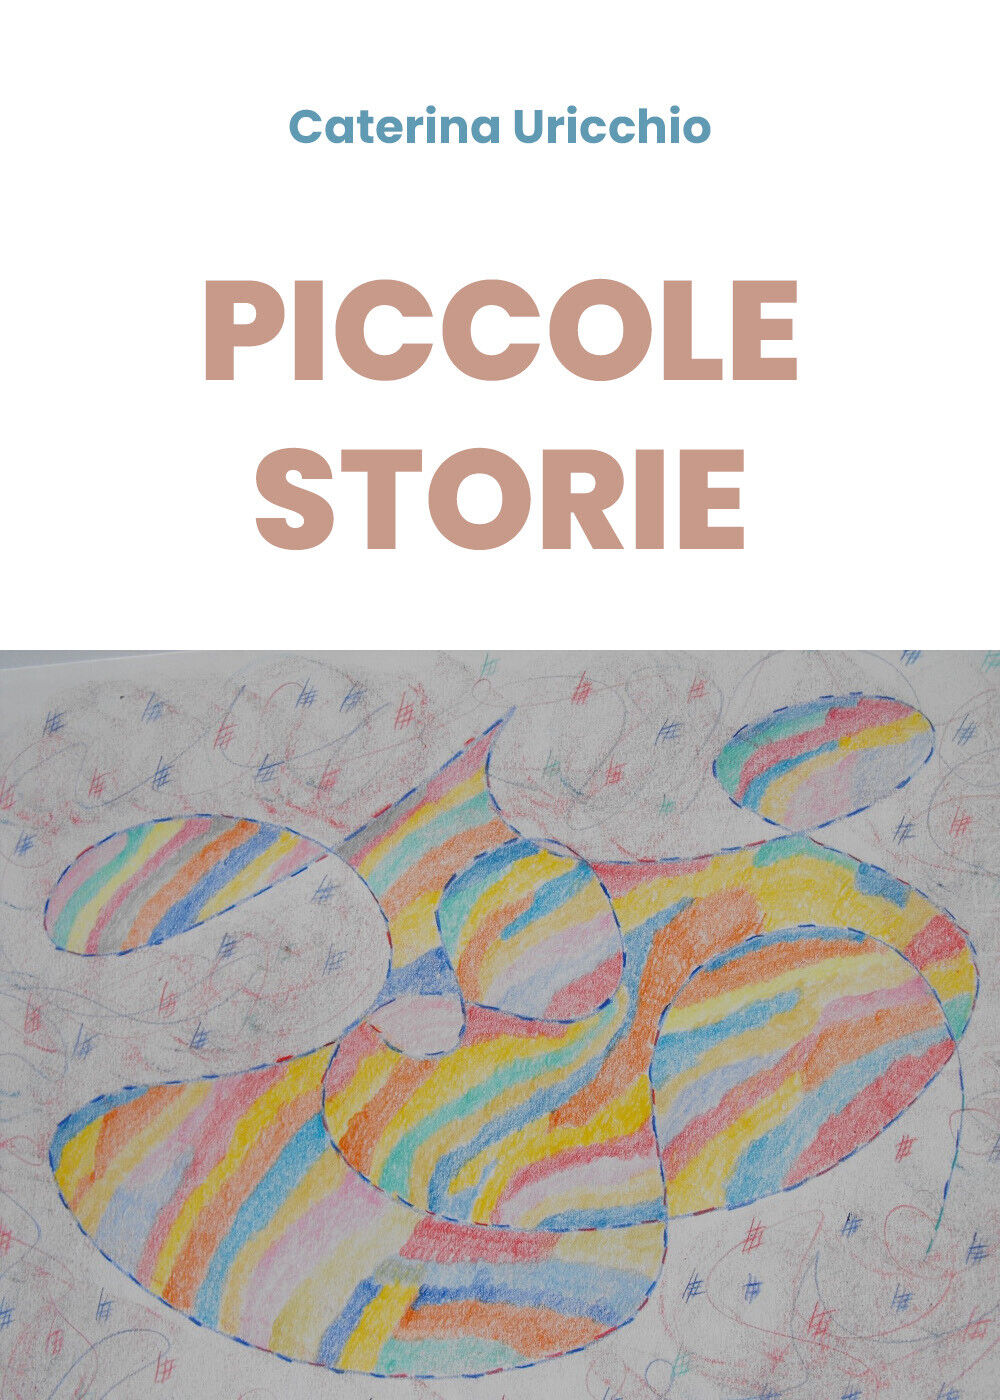 Piccole Storie - Caterina Uricchio,  2019,  Youcanprint